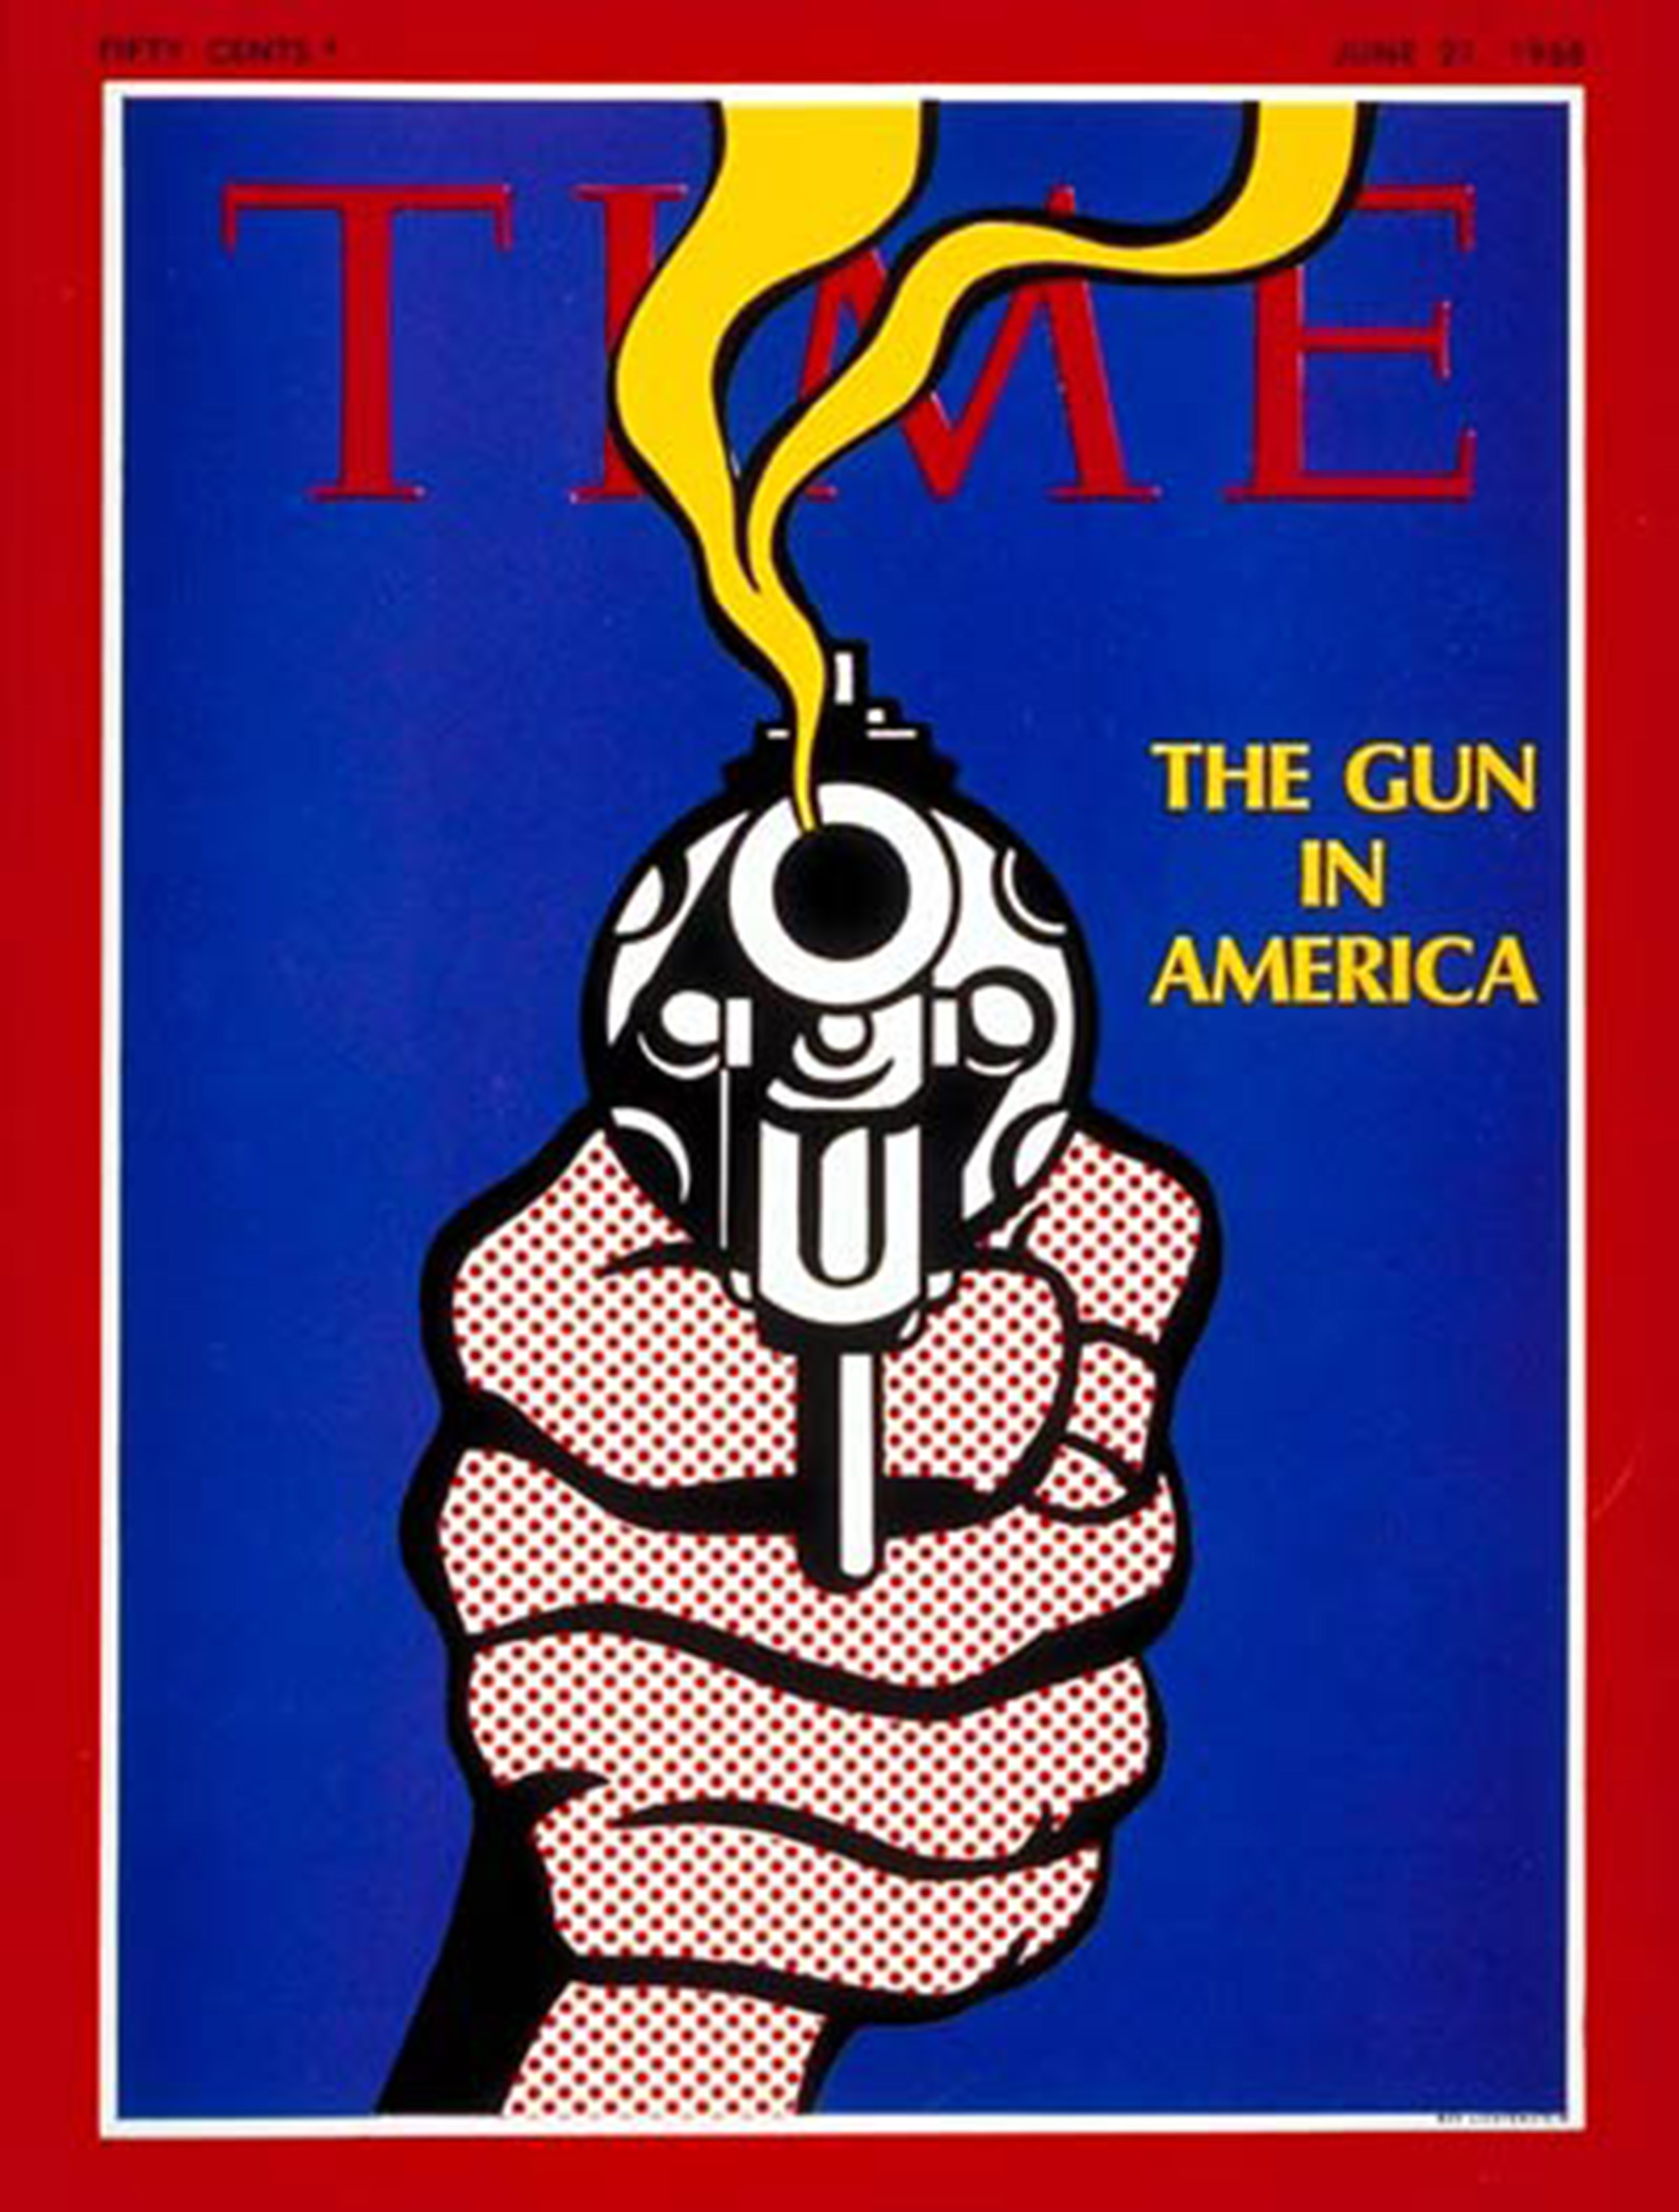 gun-control-act-1968